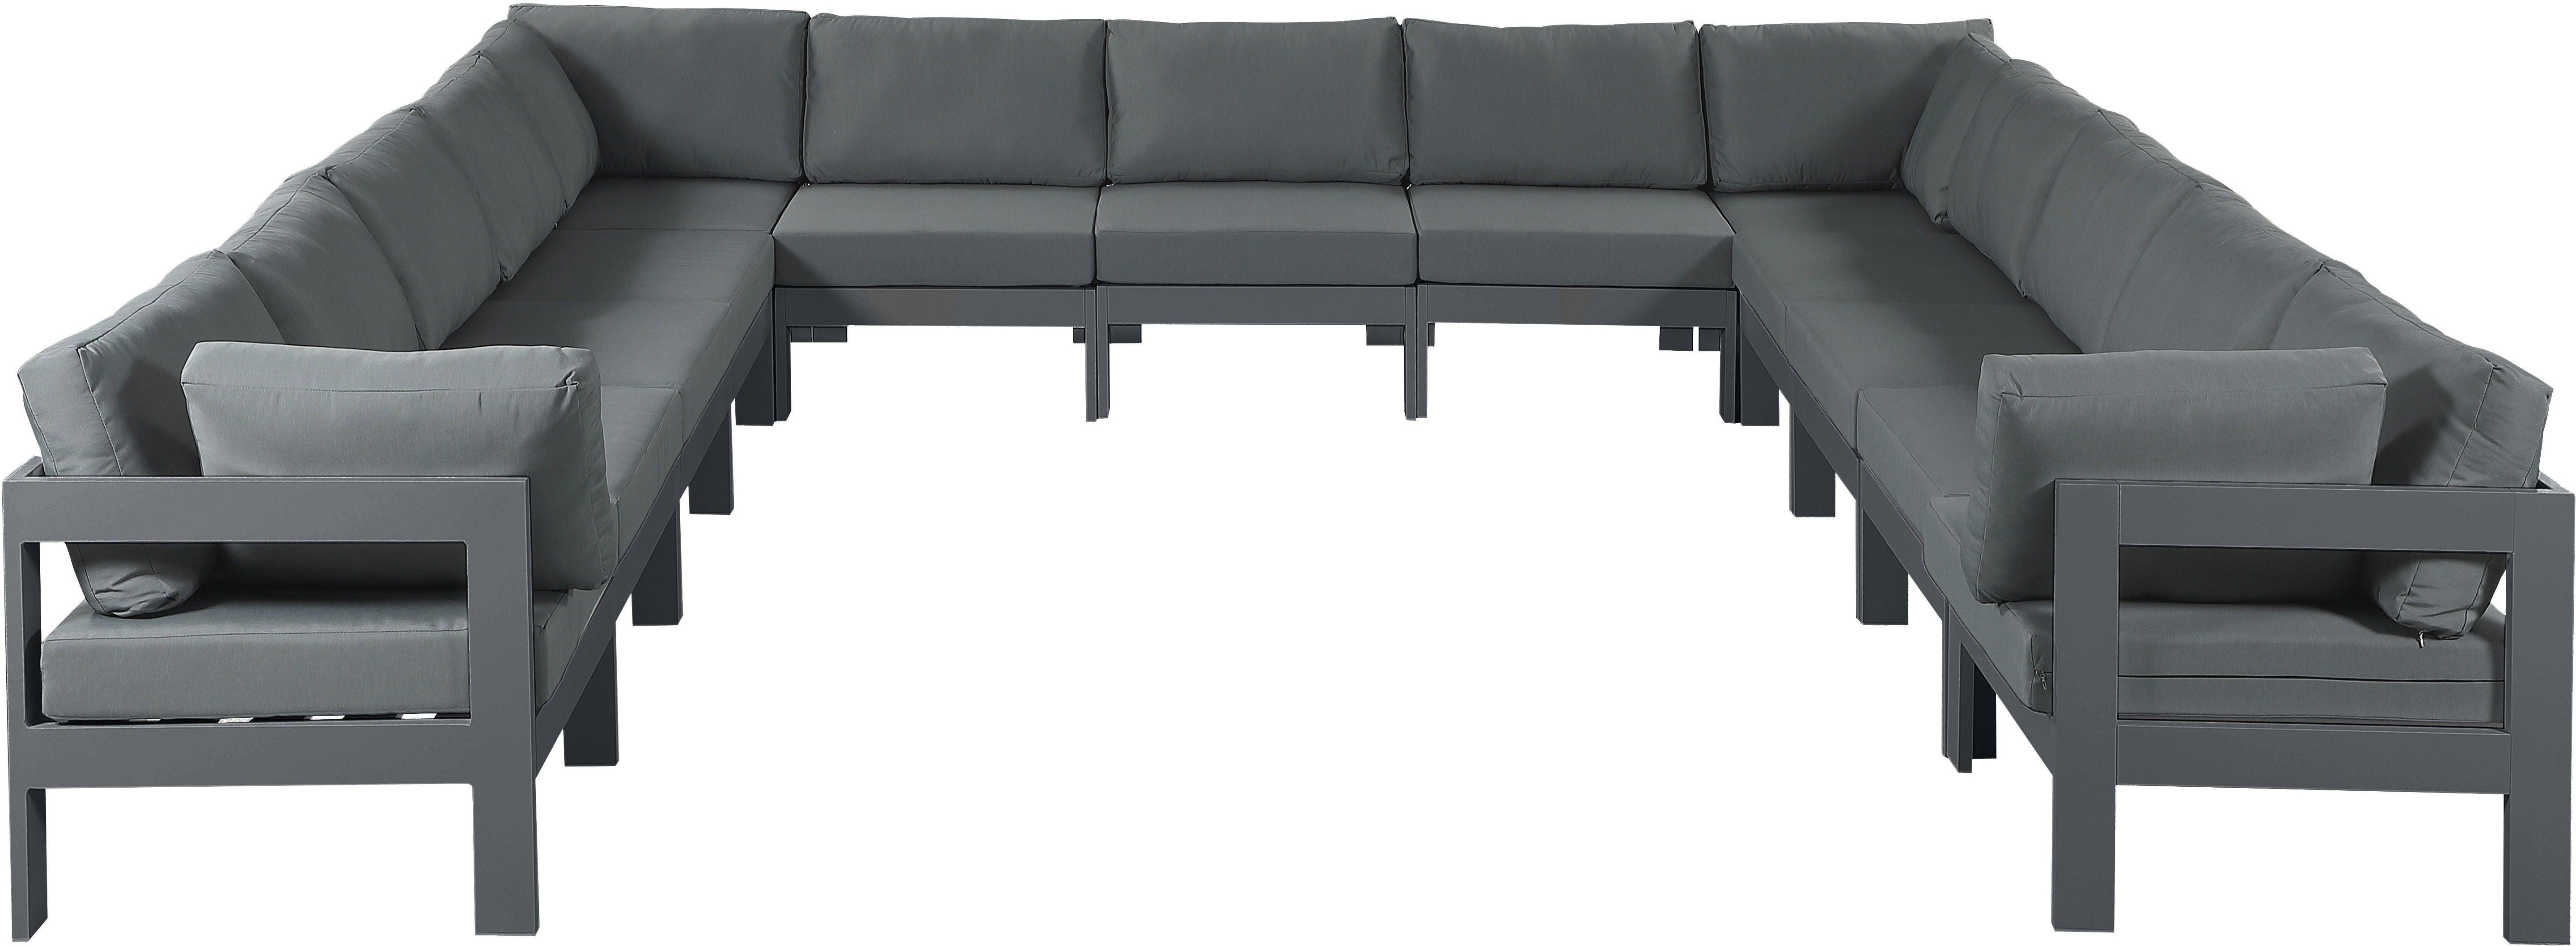 Meridian Furniture - Nizuc - Outdoor Patio Modular Sectional 13 Piece - Grey - 5th Avenue Furniture